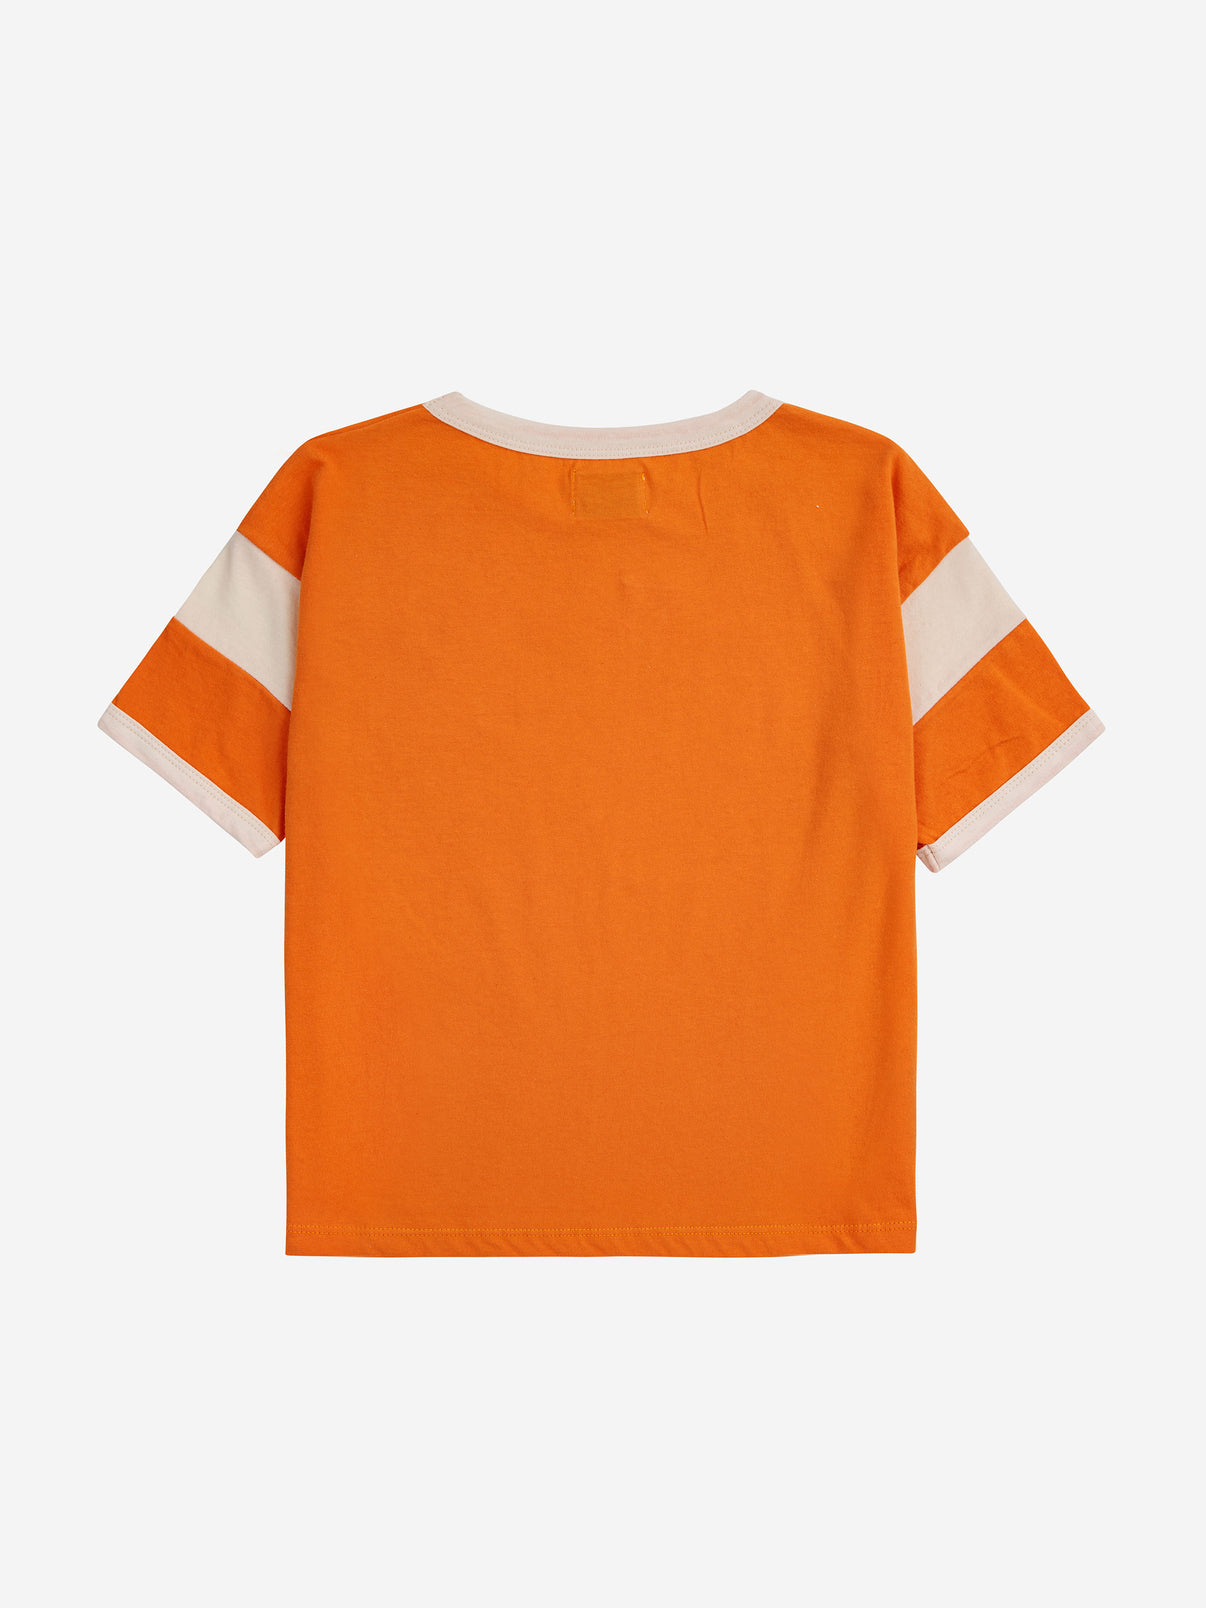 100% cotton orange short sleeve t-shirt with Bobo Choses decal.